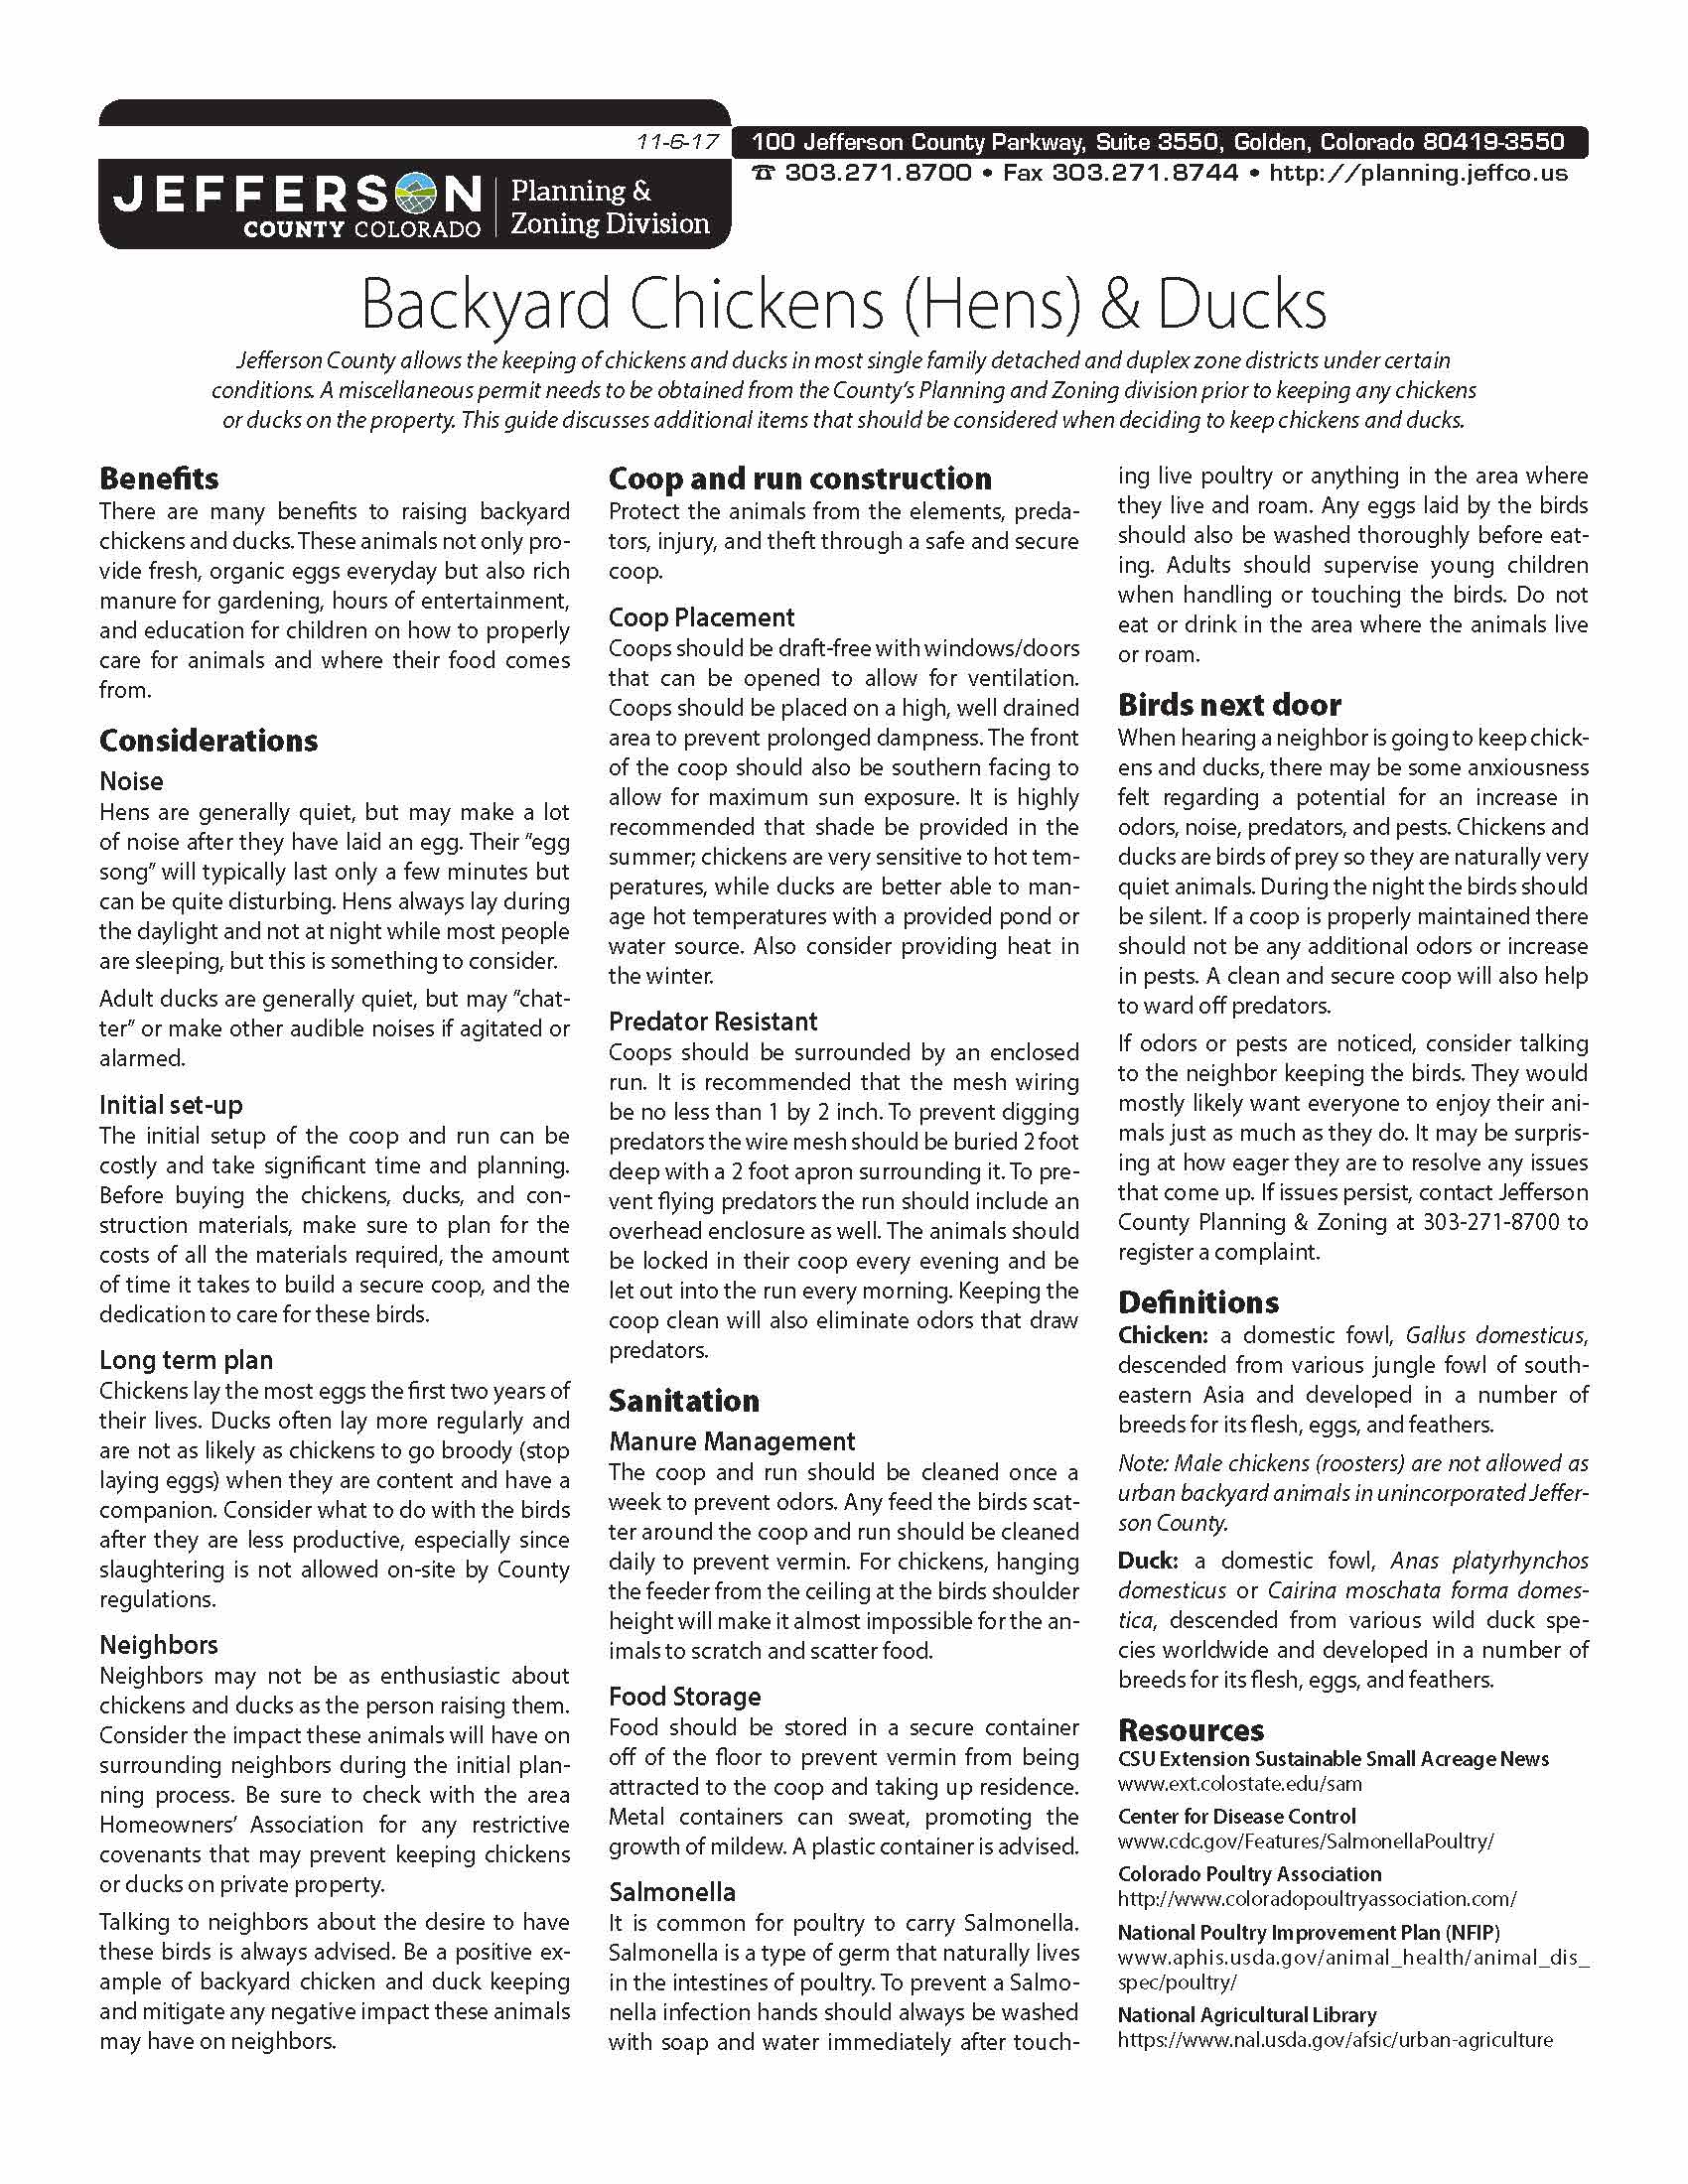 Jefferson County Backyard Chickens and Ducks_201711091300390703